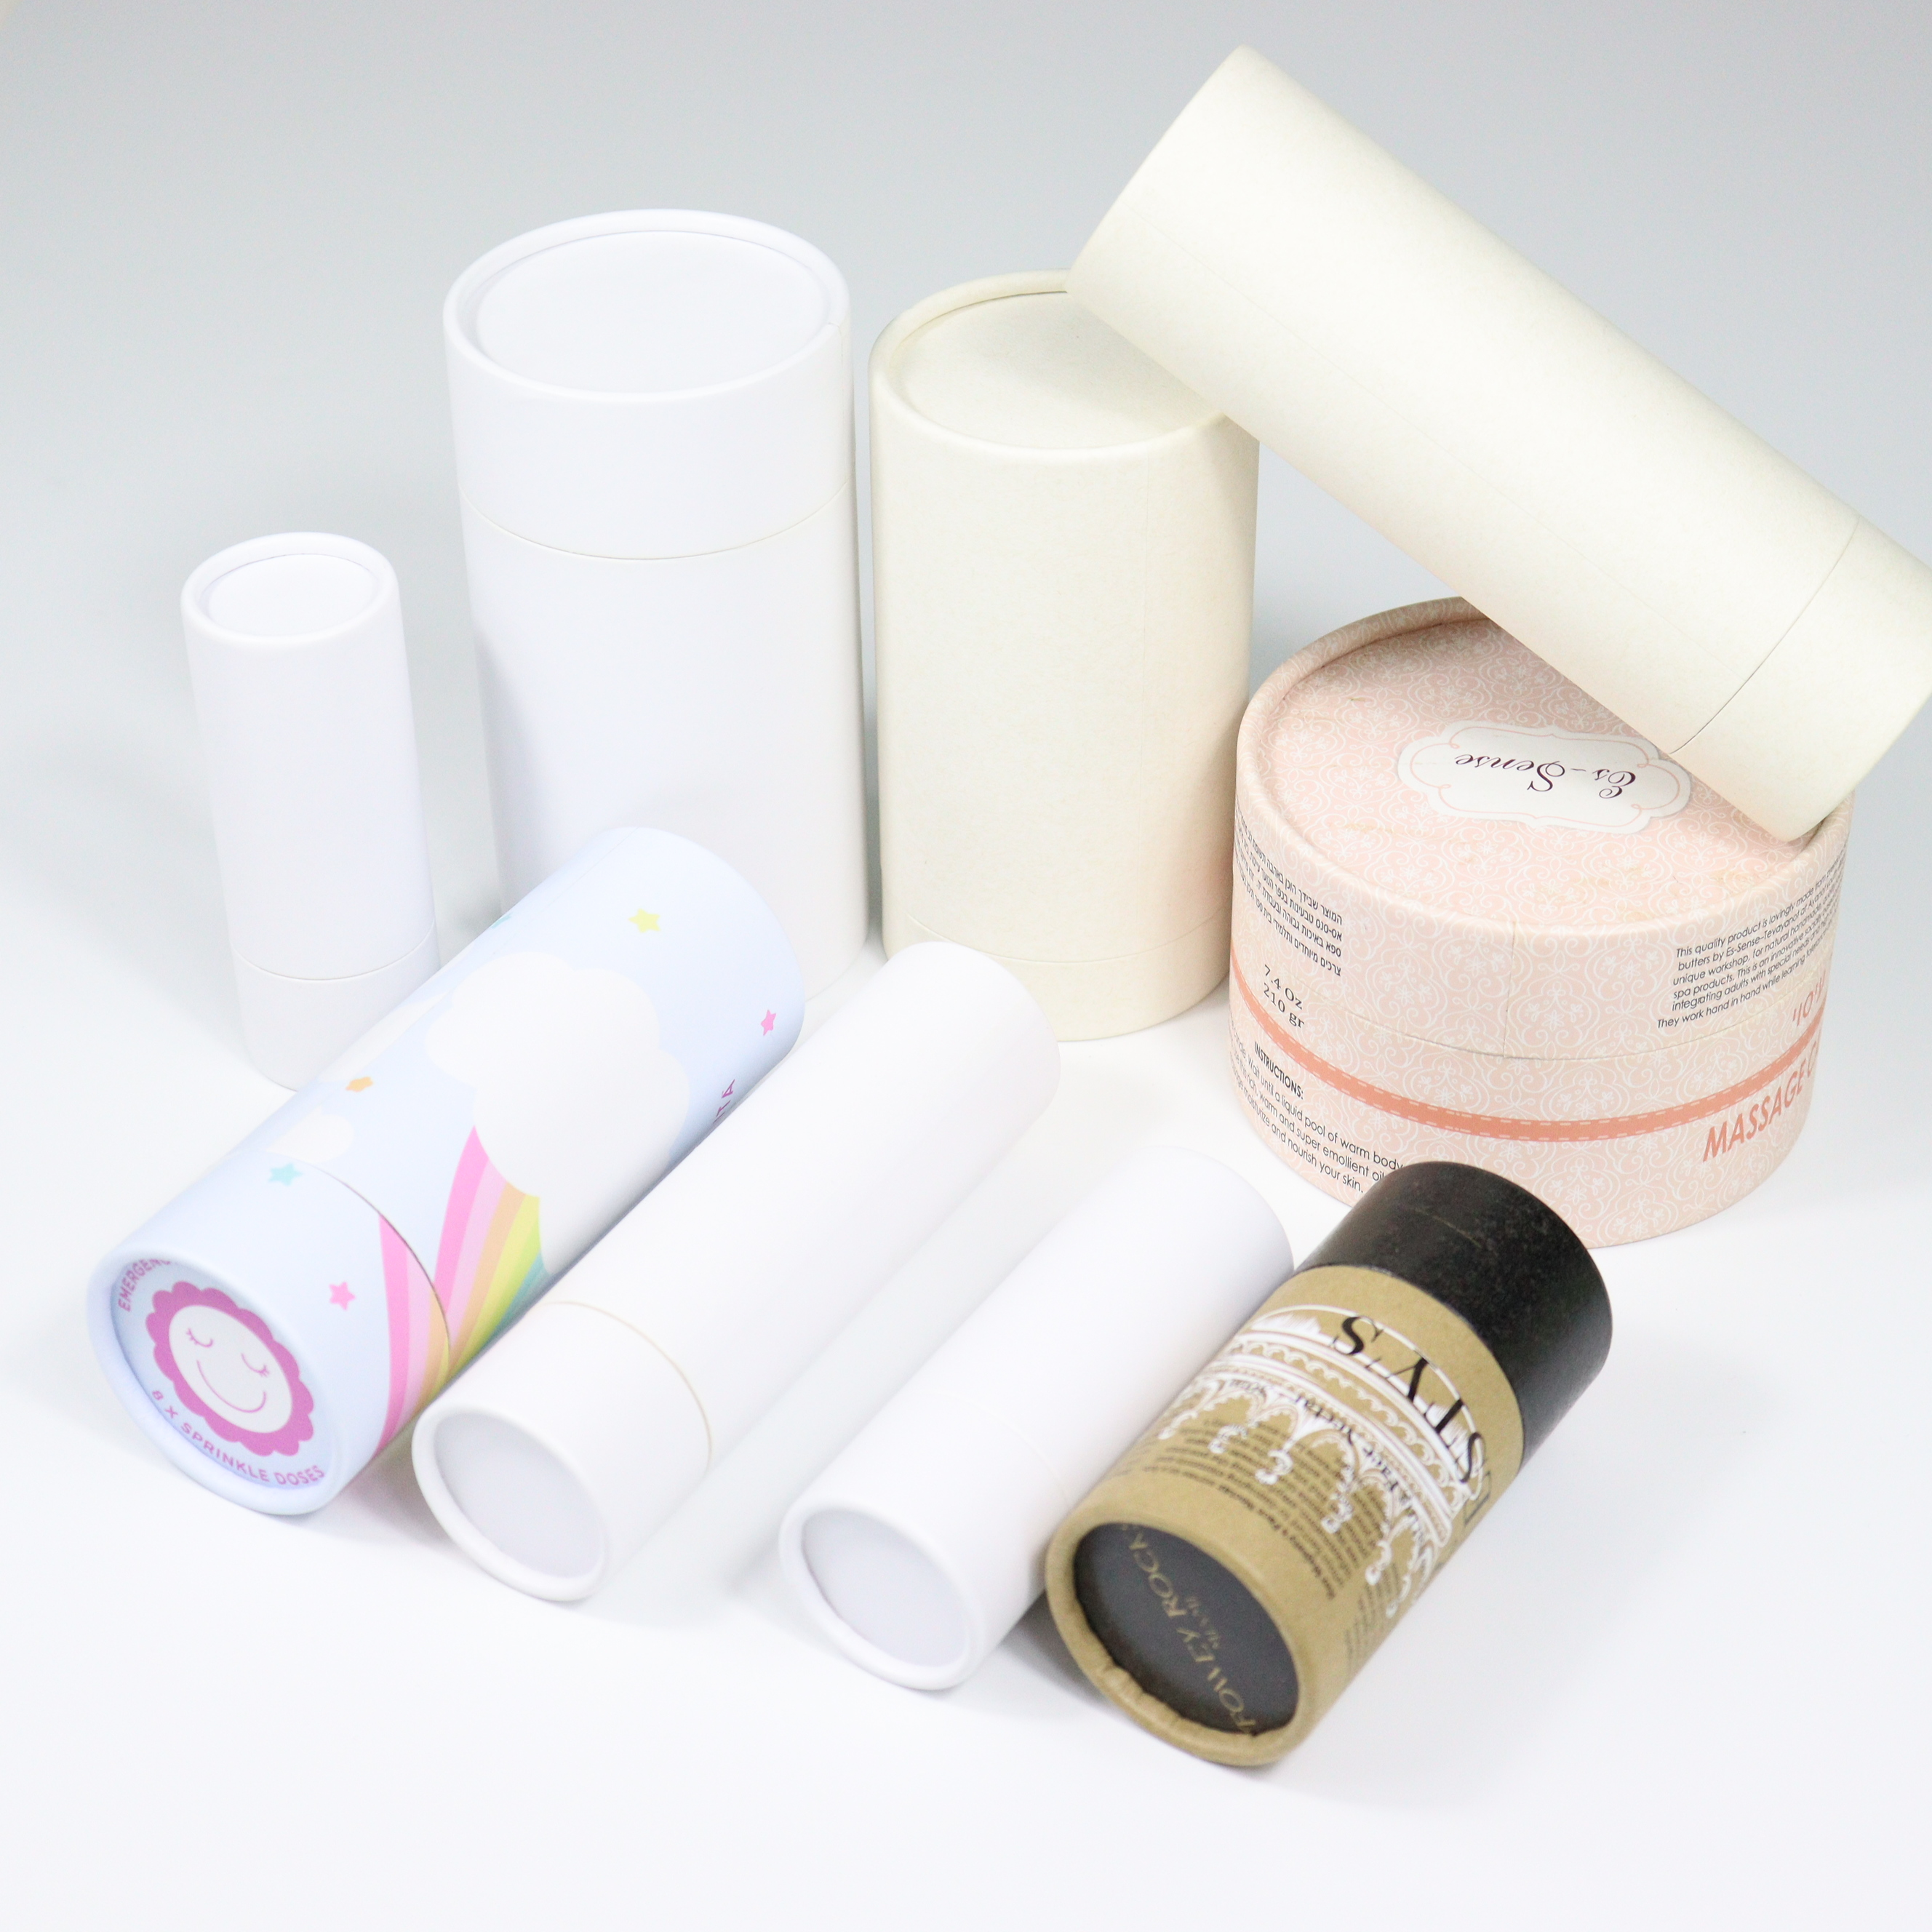 9 uses for tube packaging